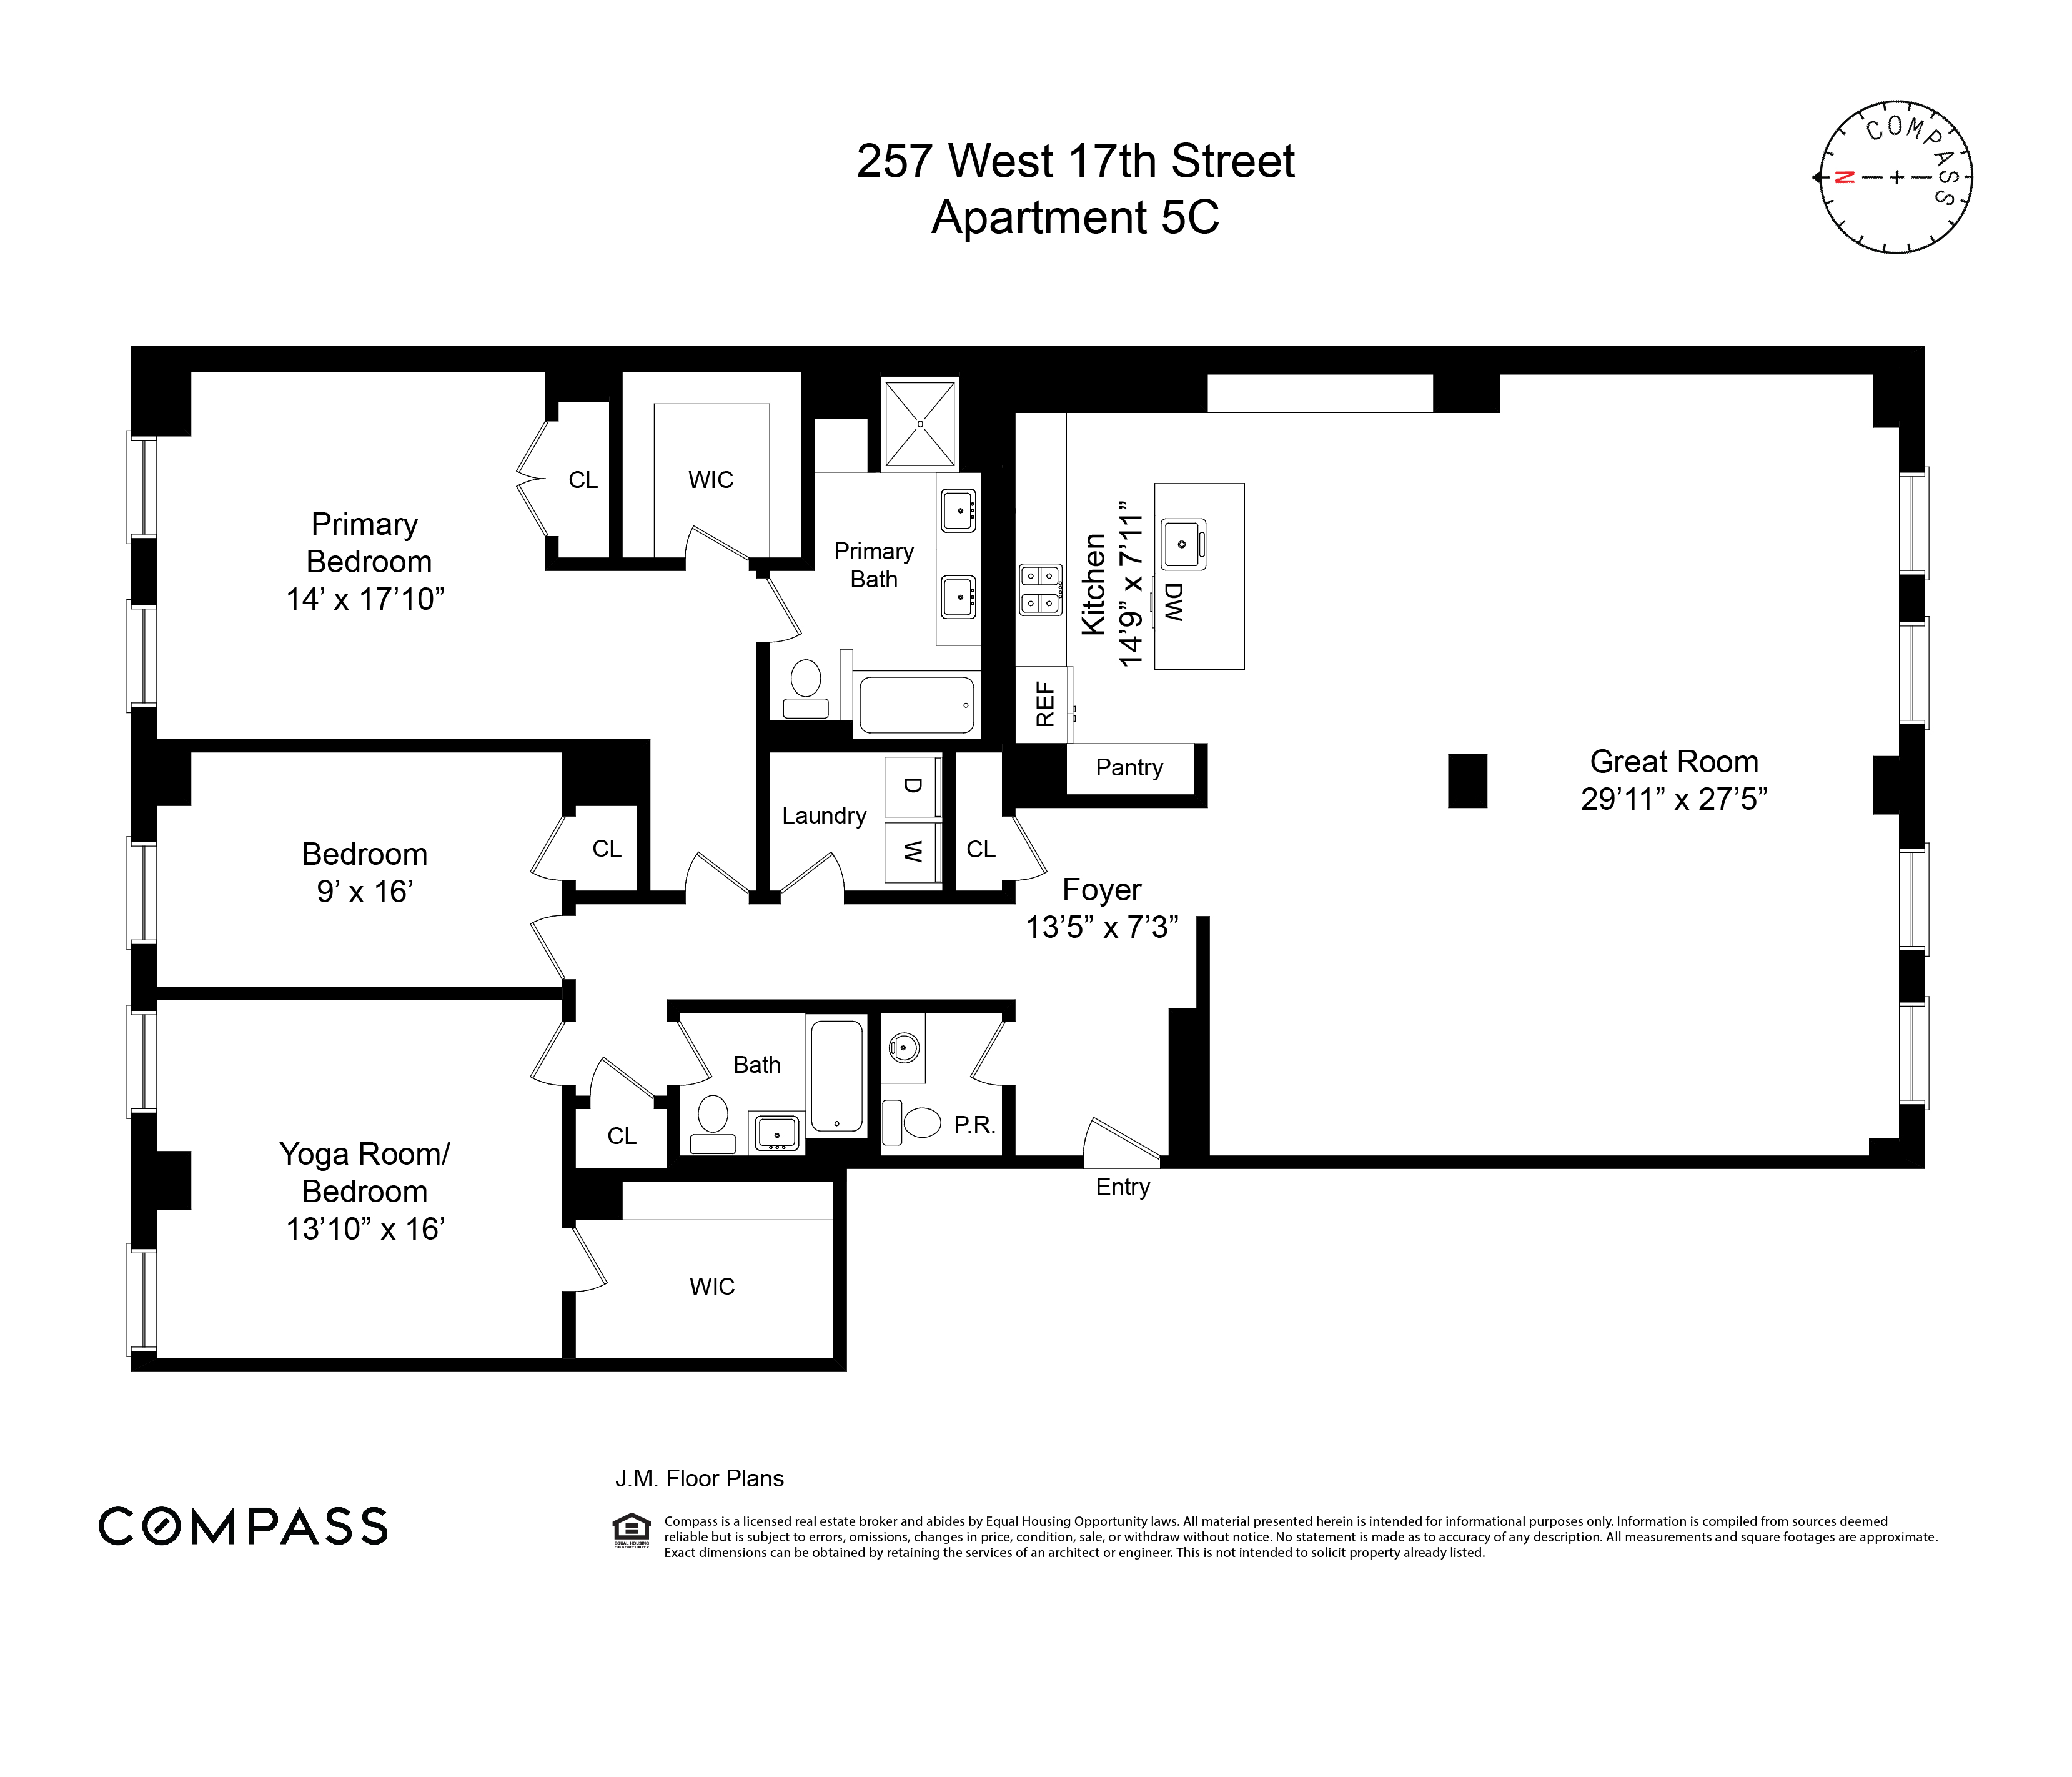 Floorplan for 257 West 17th Street, 5C